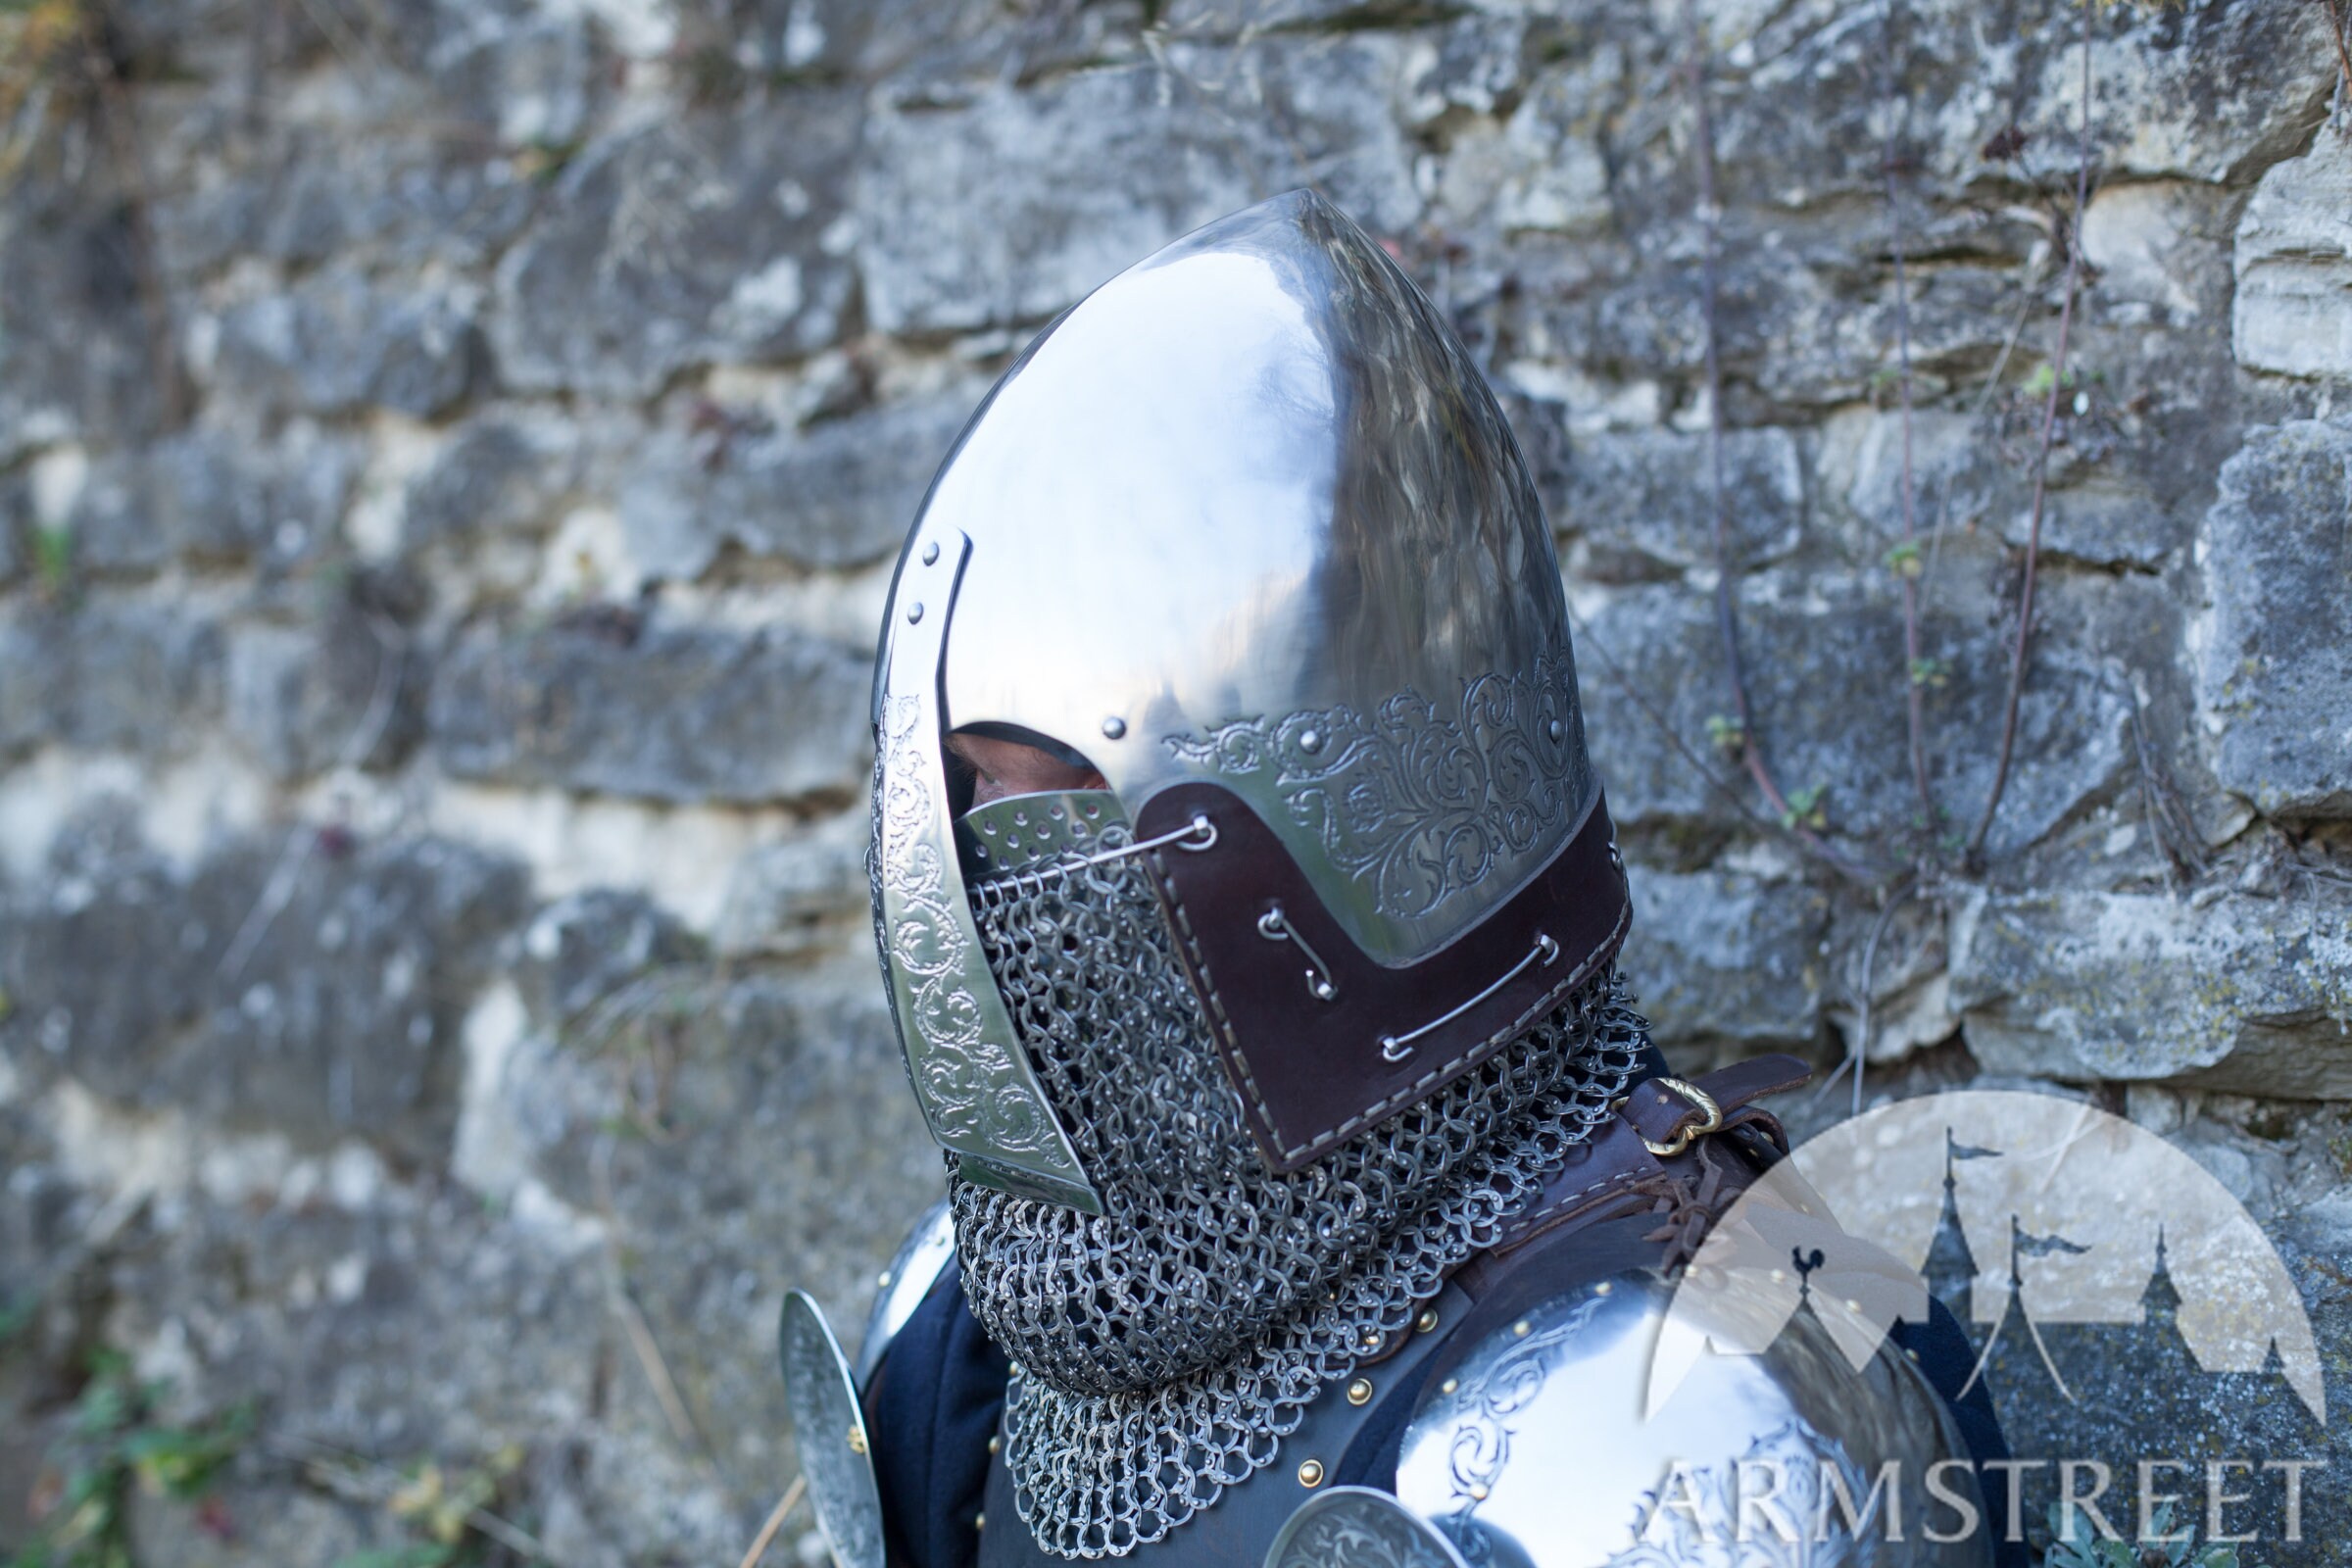 Helm knight of Fortune Medieval Bascinet Helmet | Etsy